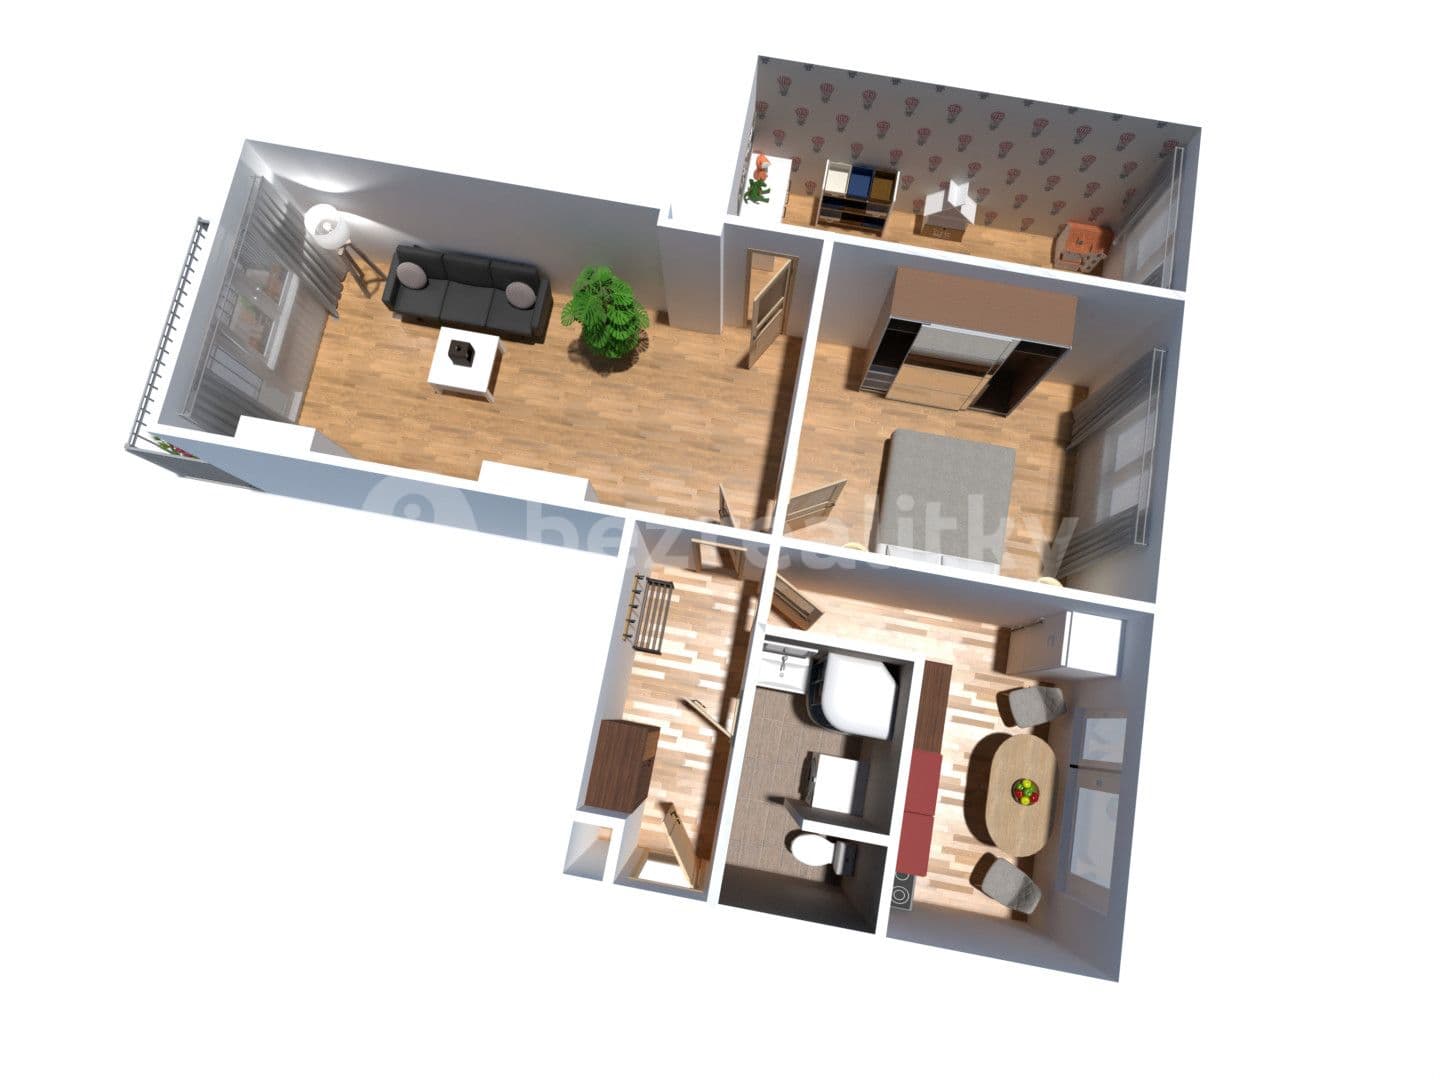 3 bedroom flat for sale, 65 m², Mjr. Šulce, Chomutov, Ústecký Region